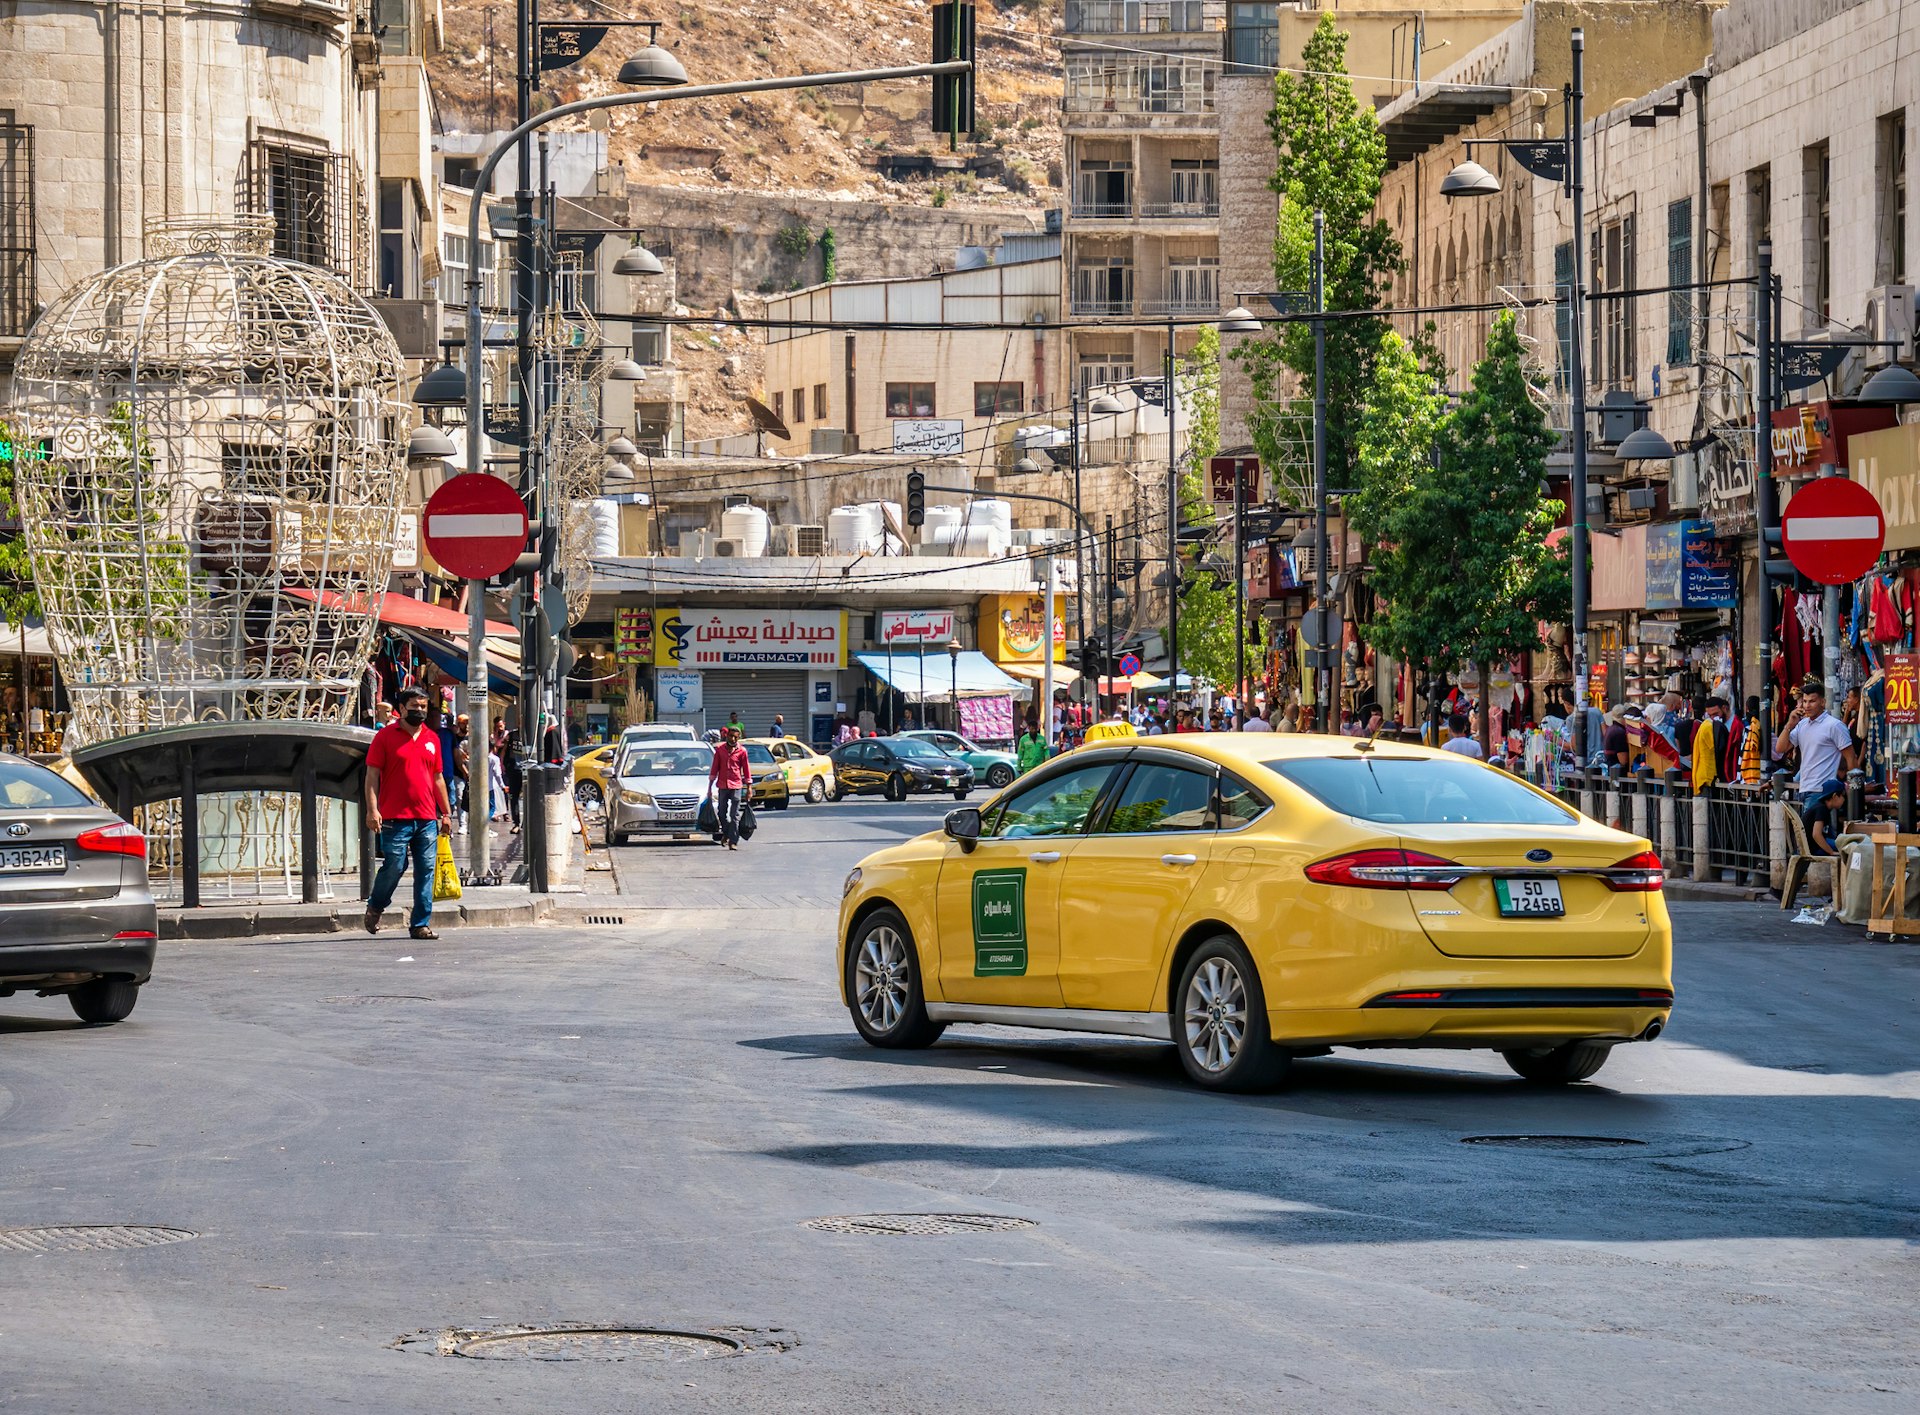 A yellow taxi driving along a busy street in Amman, Jordan